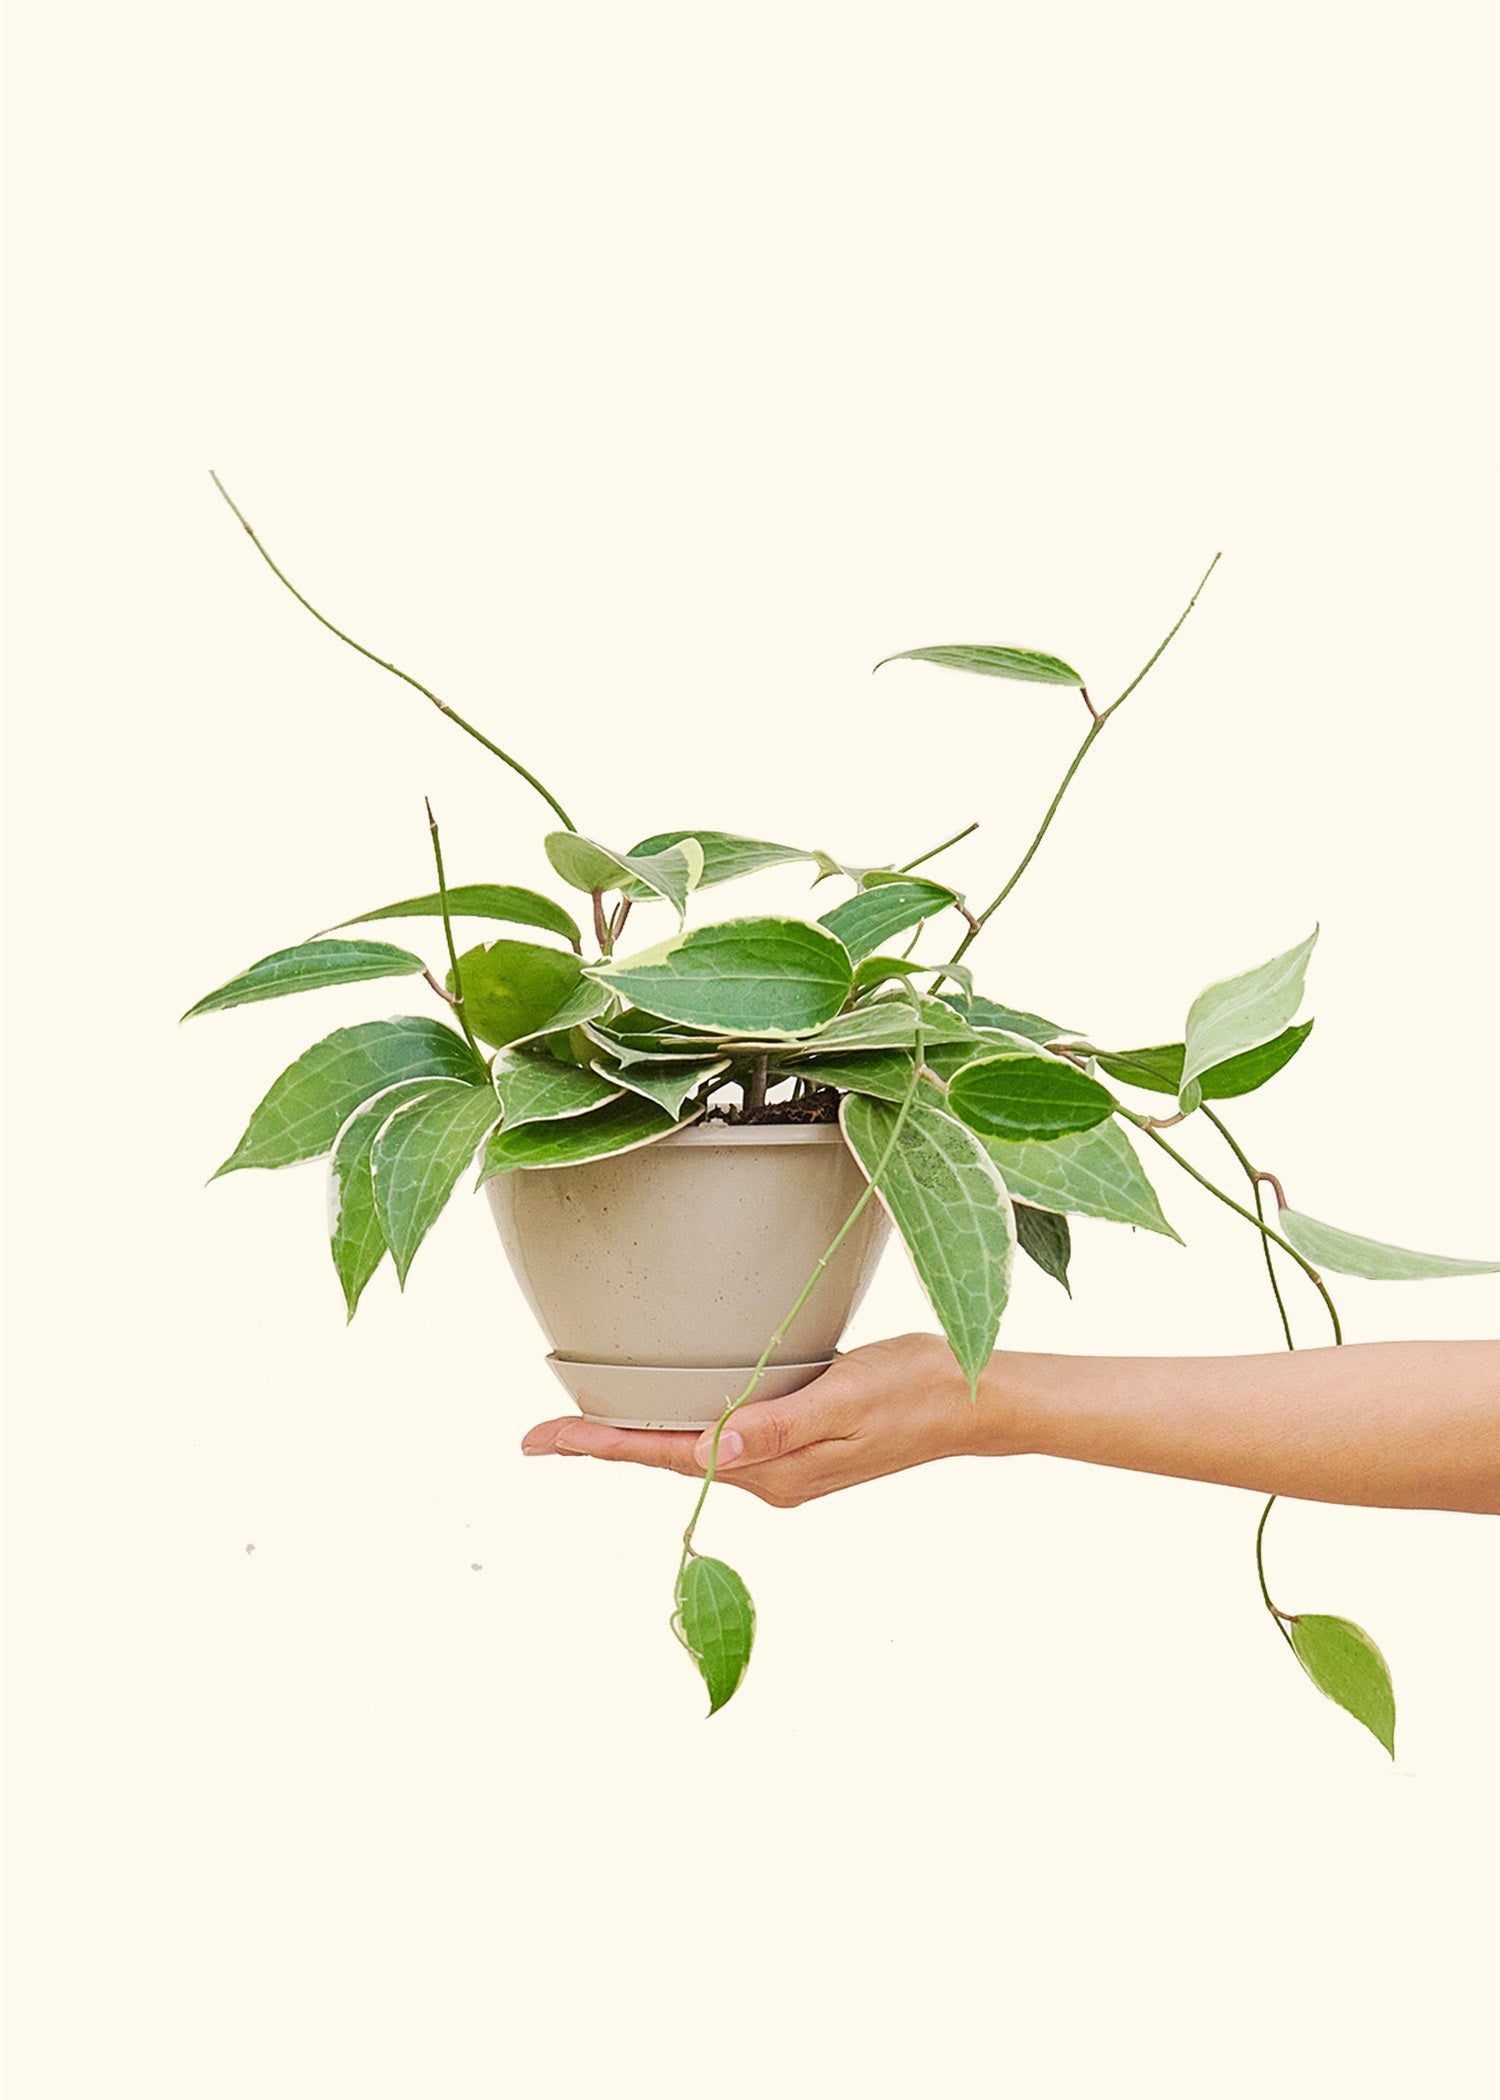 Hoya 'Macrophylla' 6" in a hanging basket held by a hand.